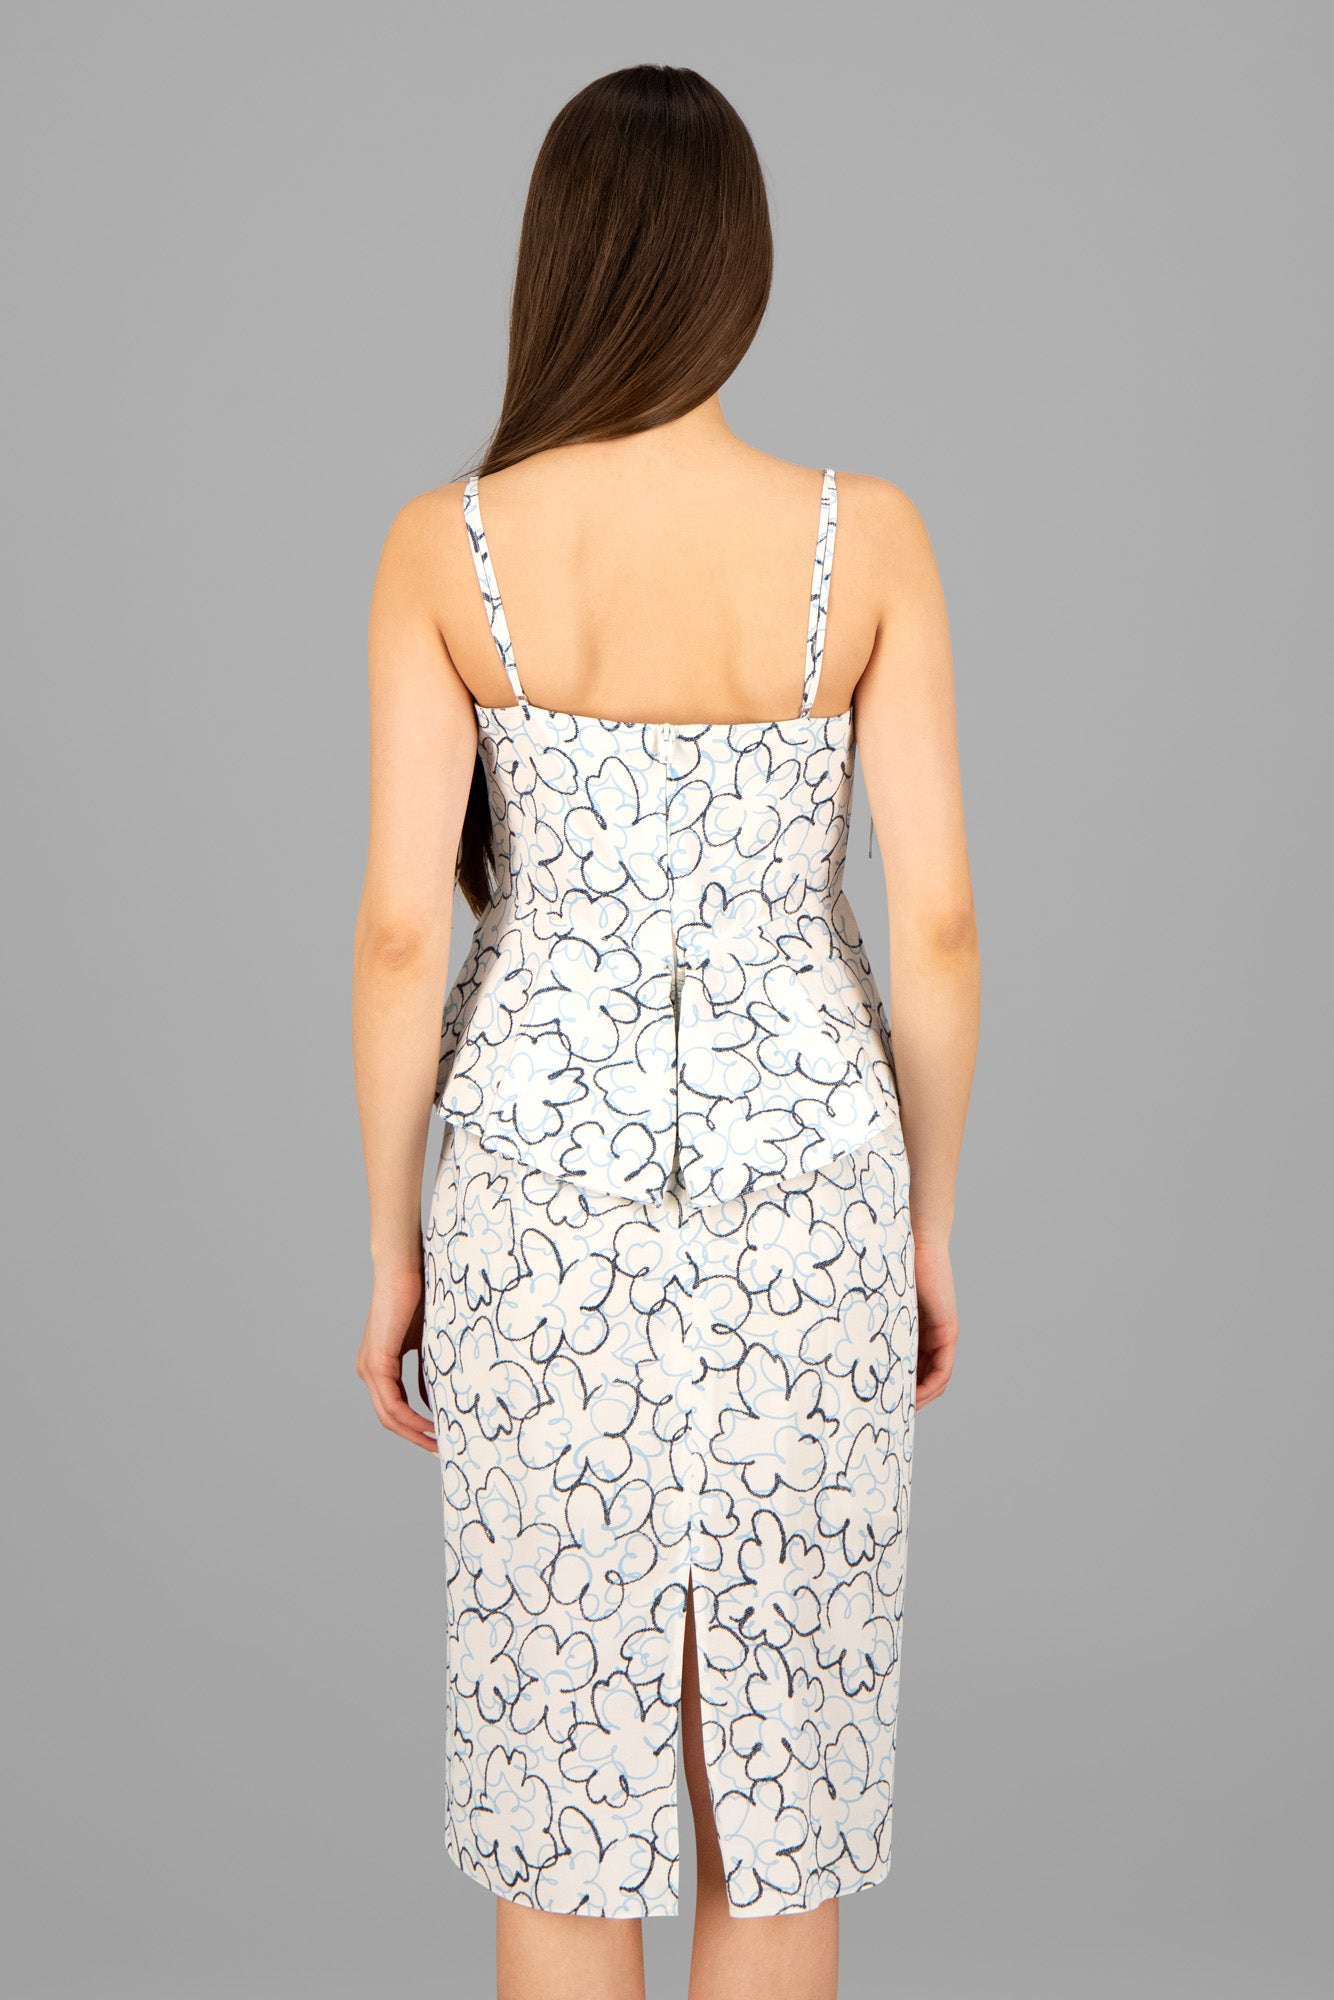 Floral-Print Dress